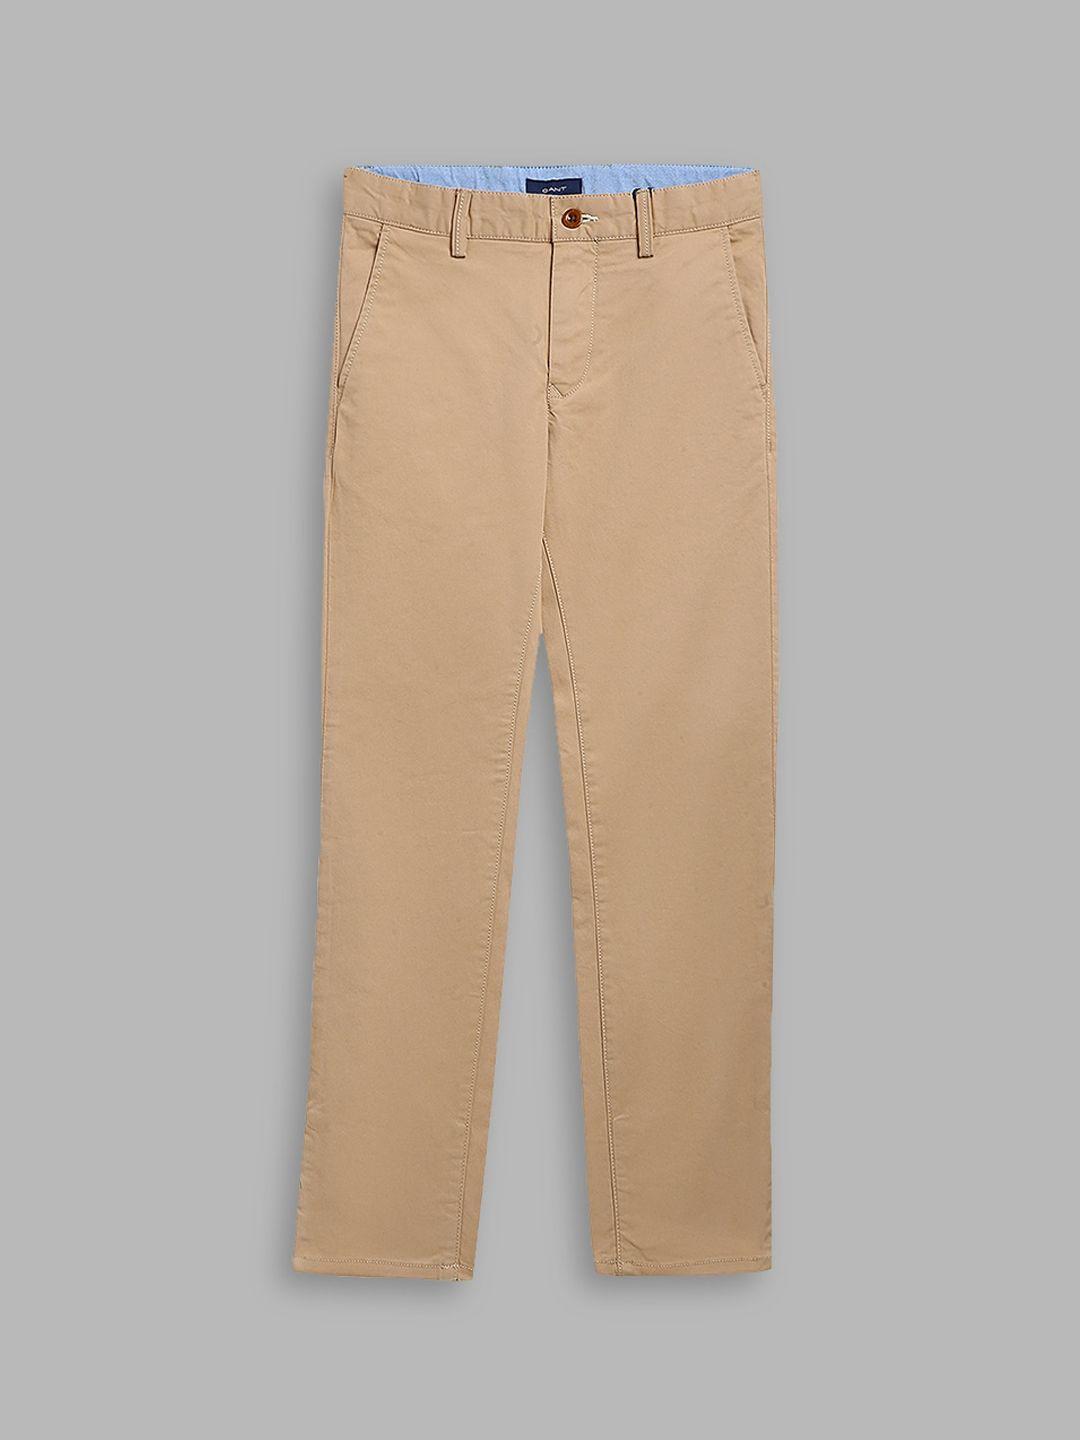 gant boys brown trousers